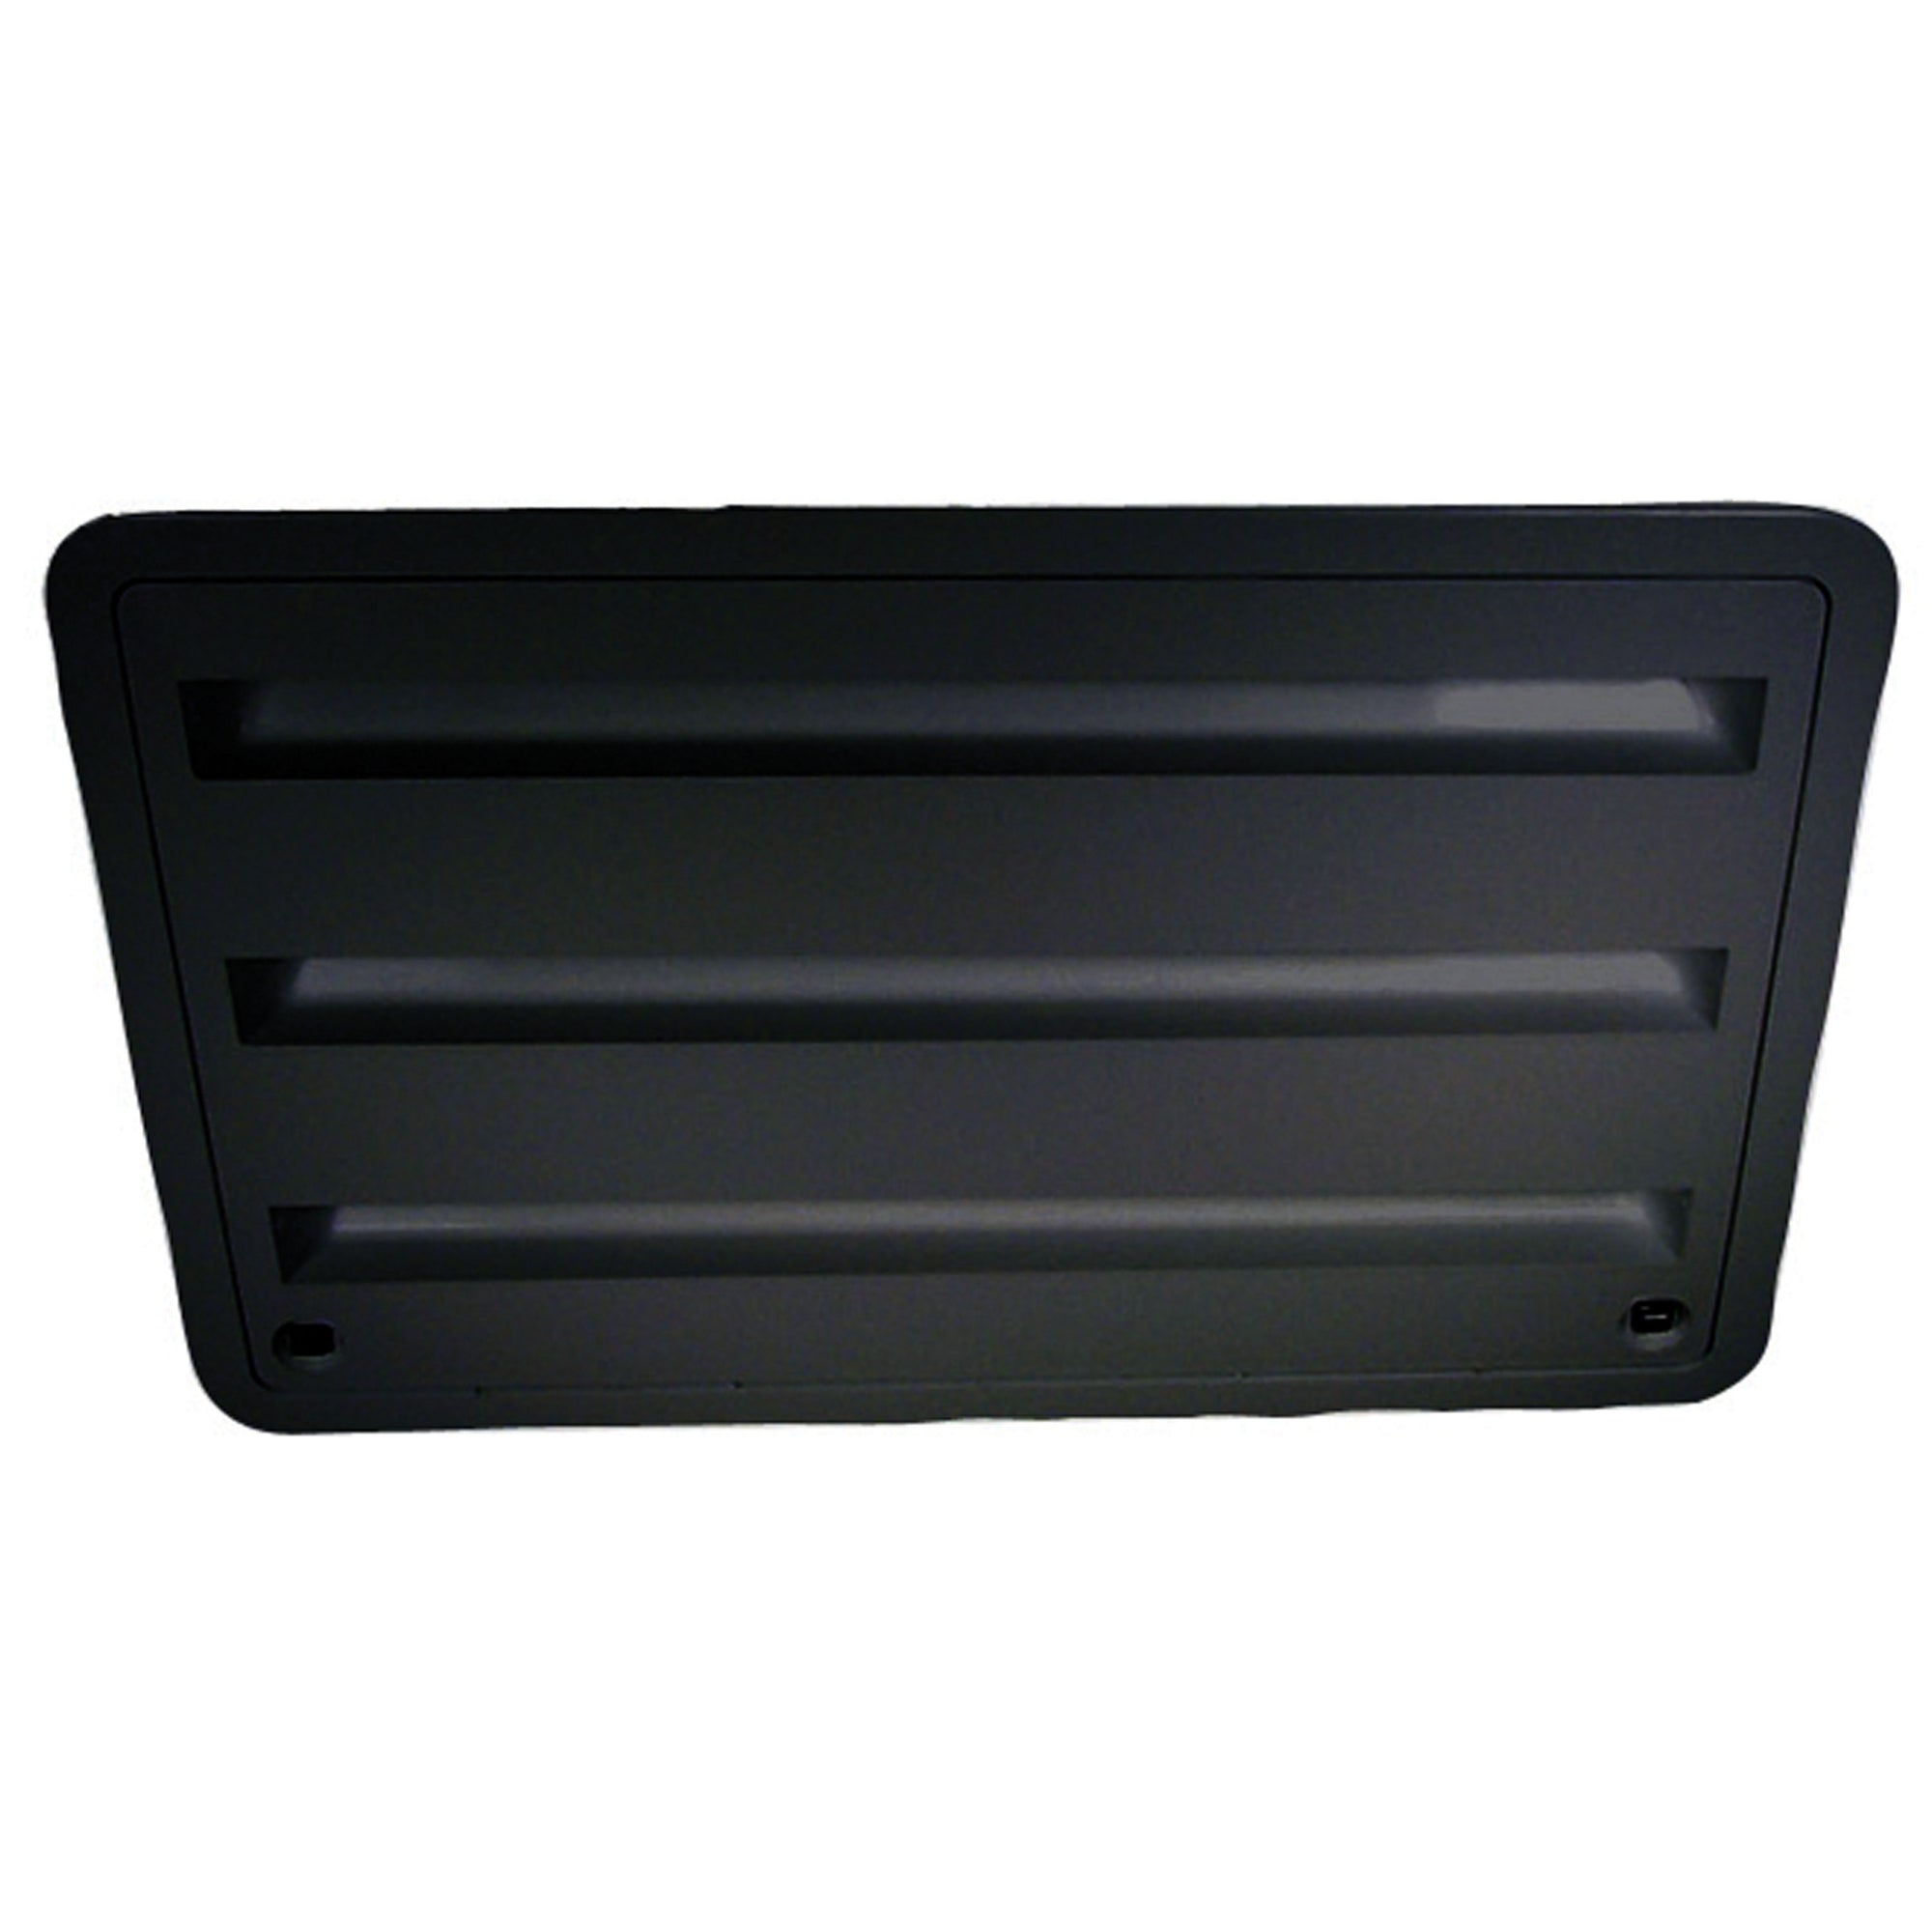 Dometic 3316941.005 Refrigerator Upper/Lower Refrigerator Side Access Vent - Black